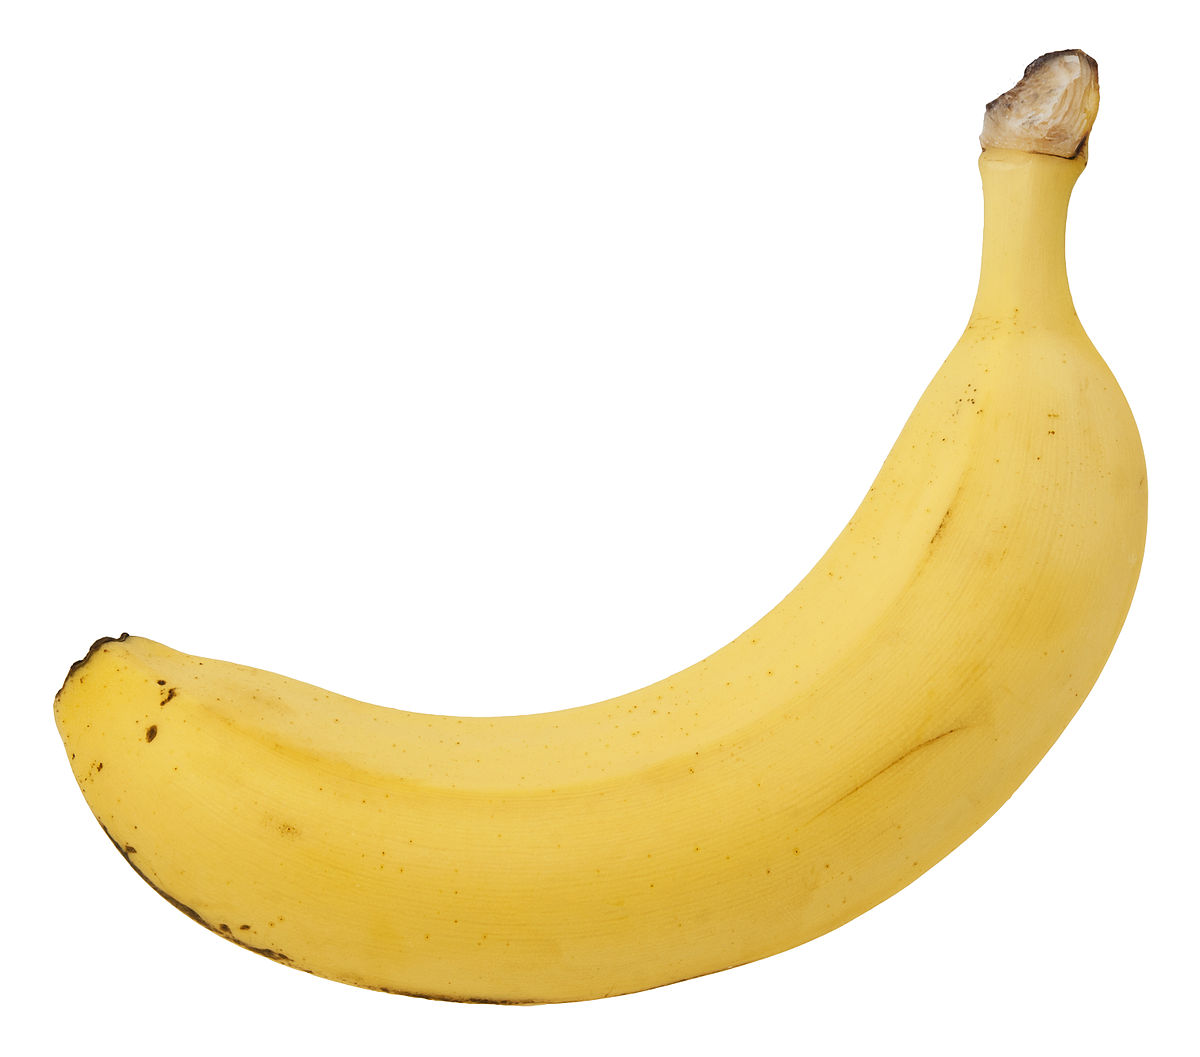 A Key Characteristic of a Banana Republic